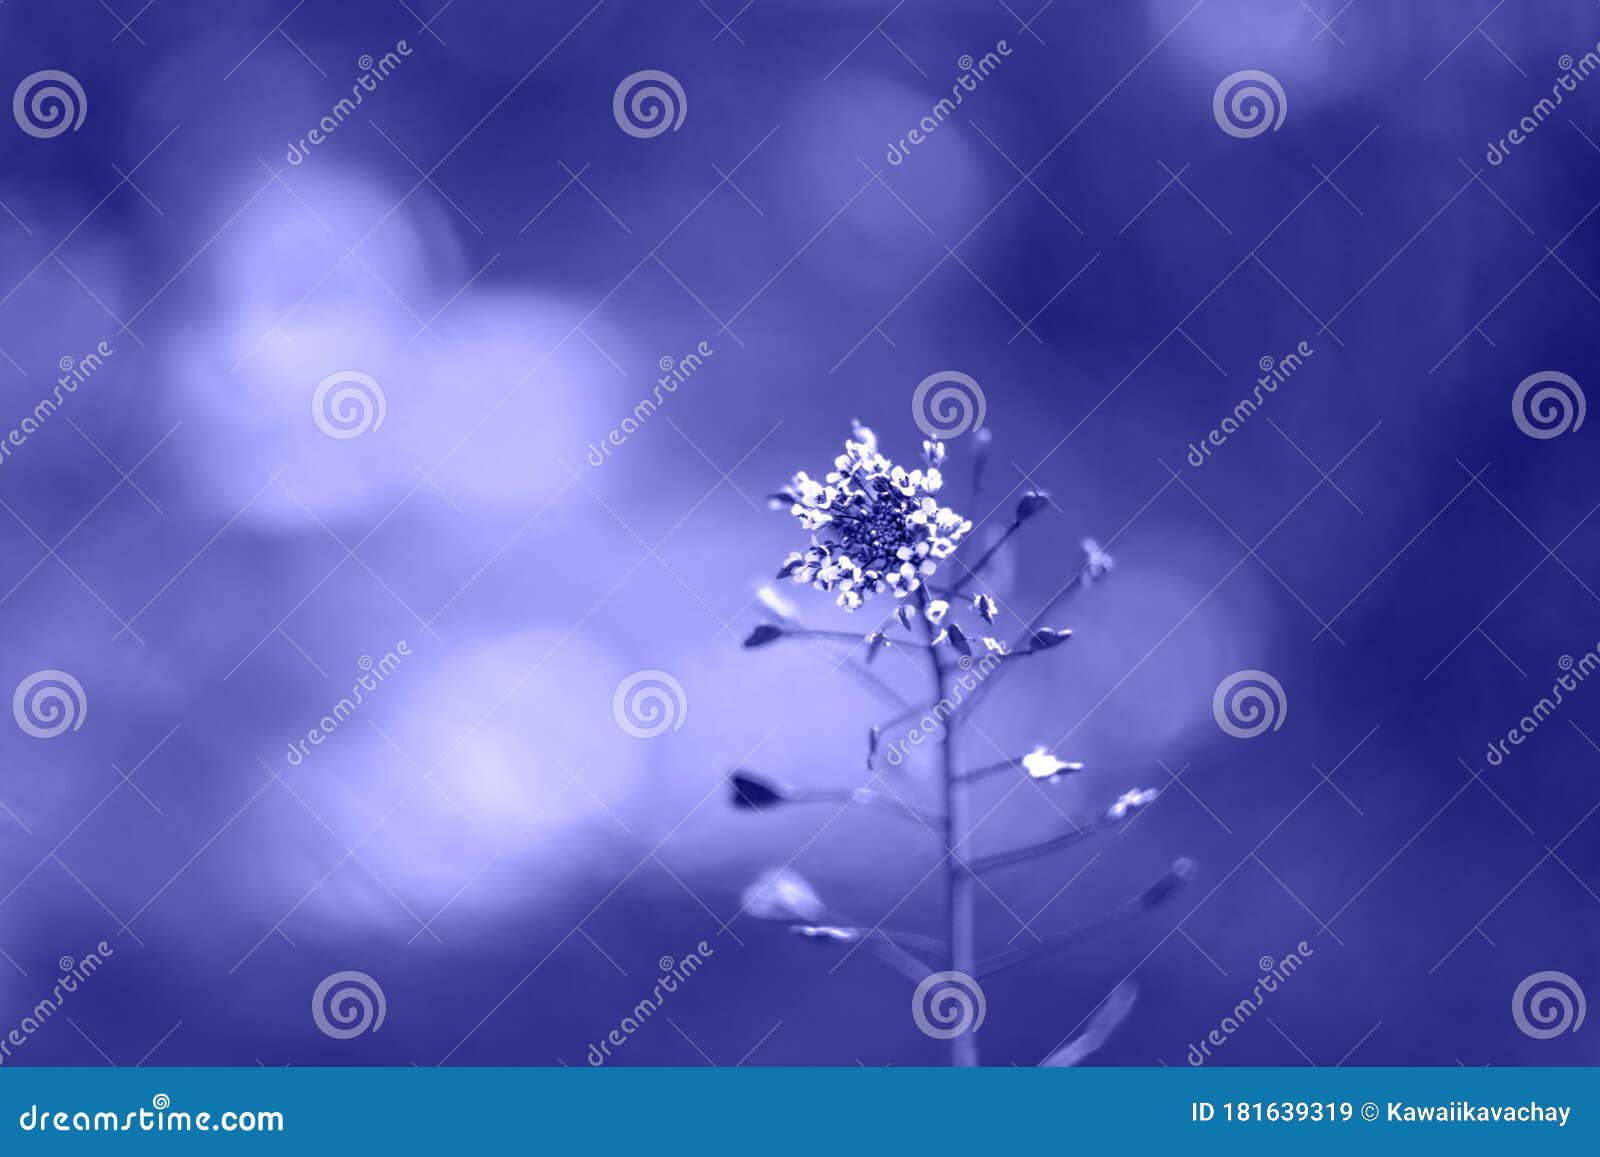 189103 Blue Heart Wallpaper Images Stock Photos  Vectors  Shutterstock